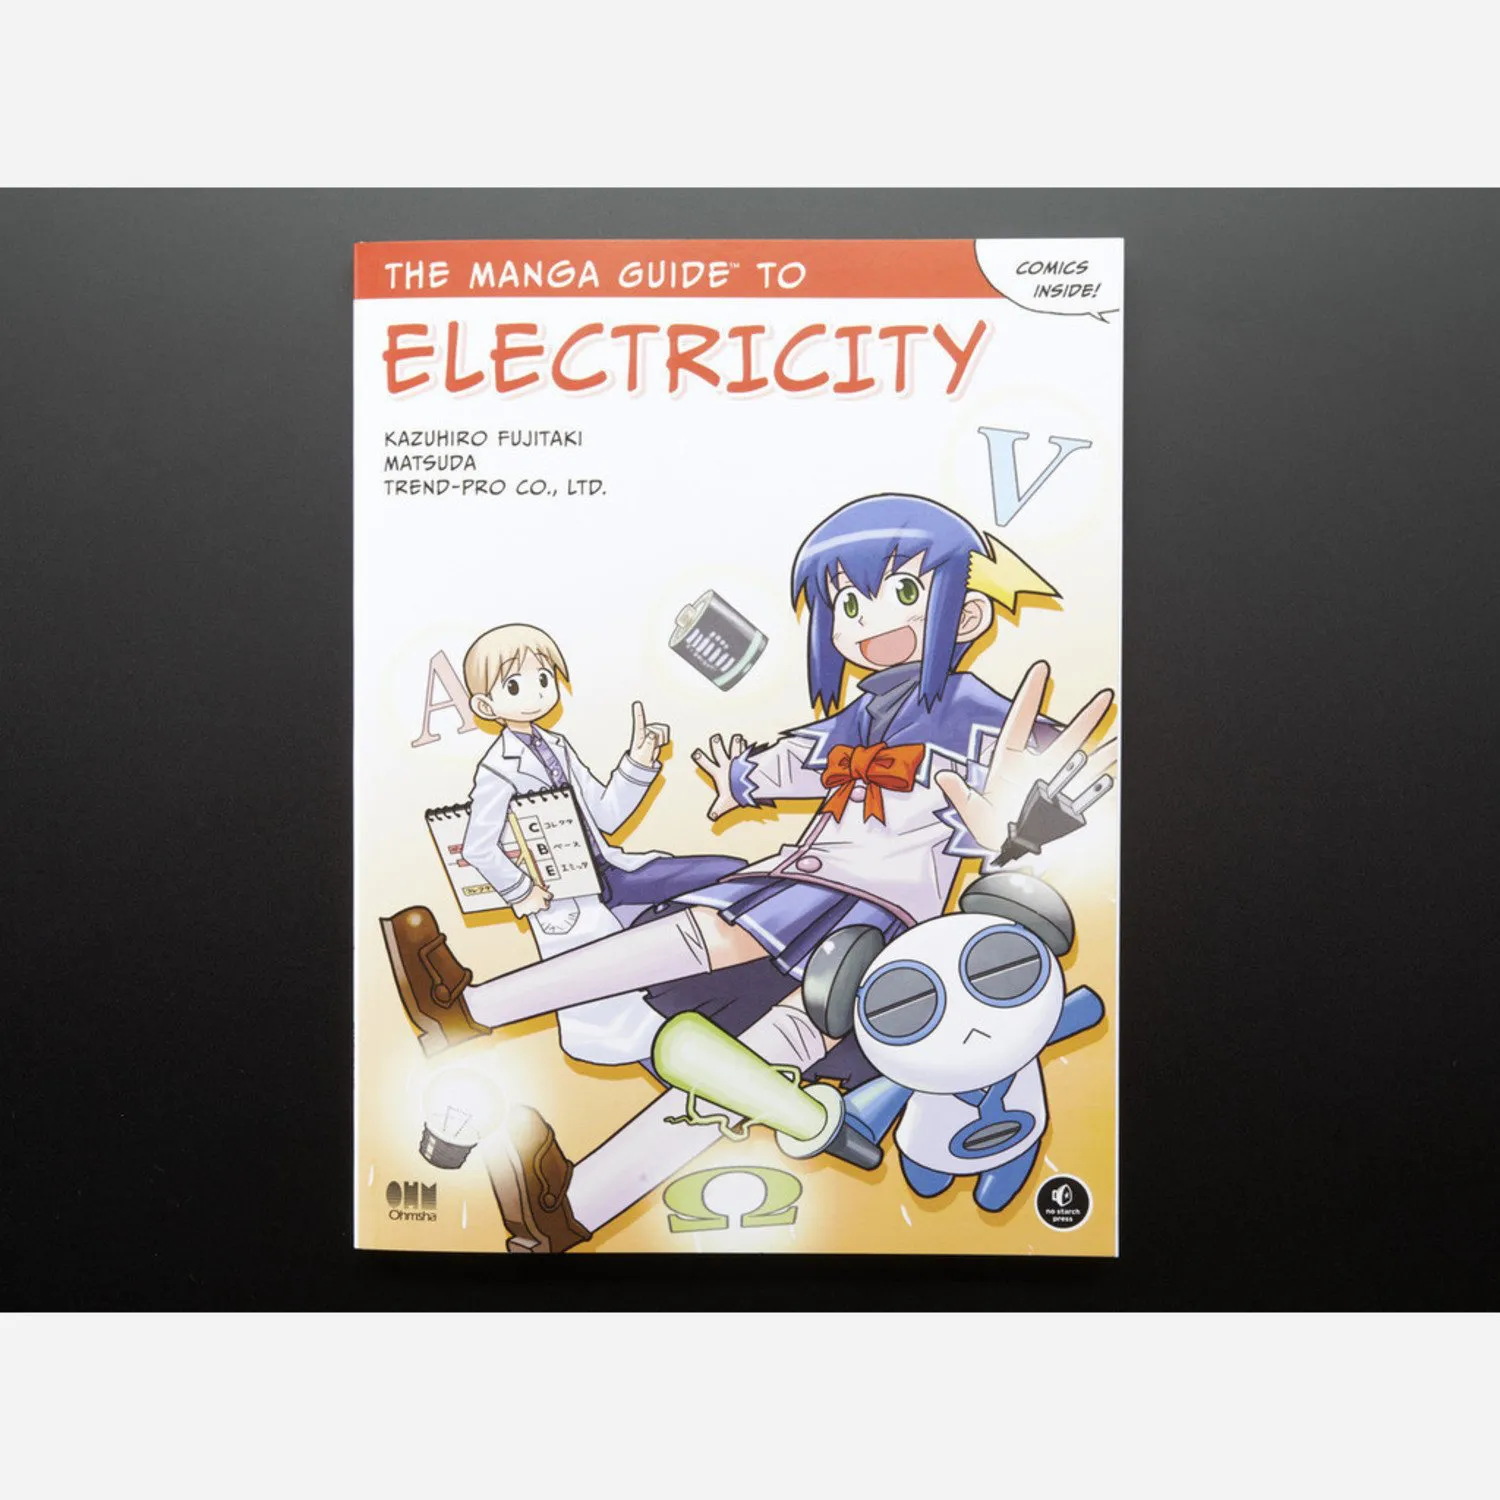 Photo of Manga Guide to Electricity by Kazuhiro Fujitaki